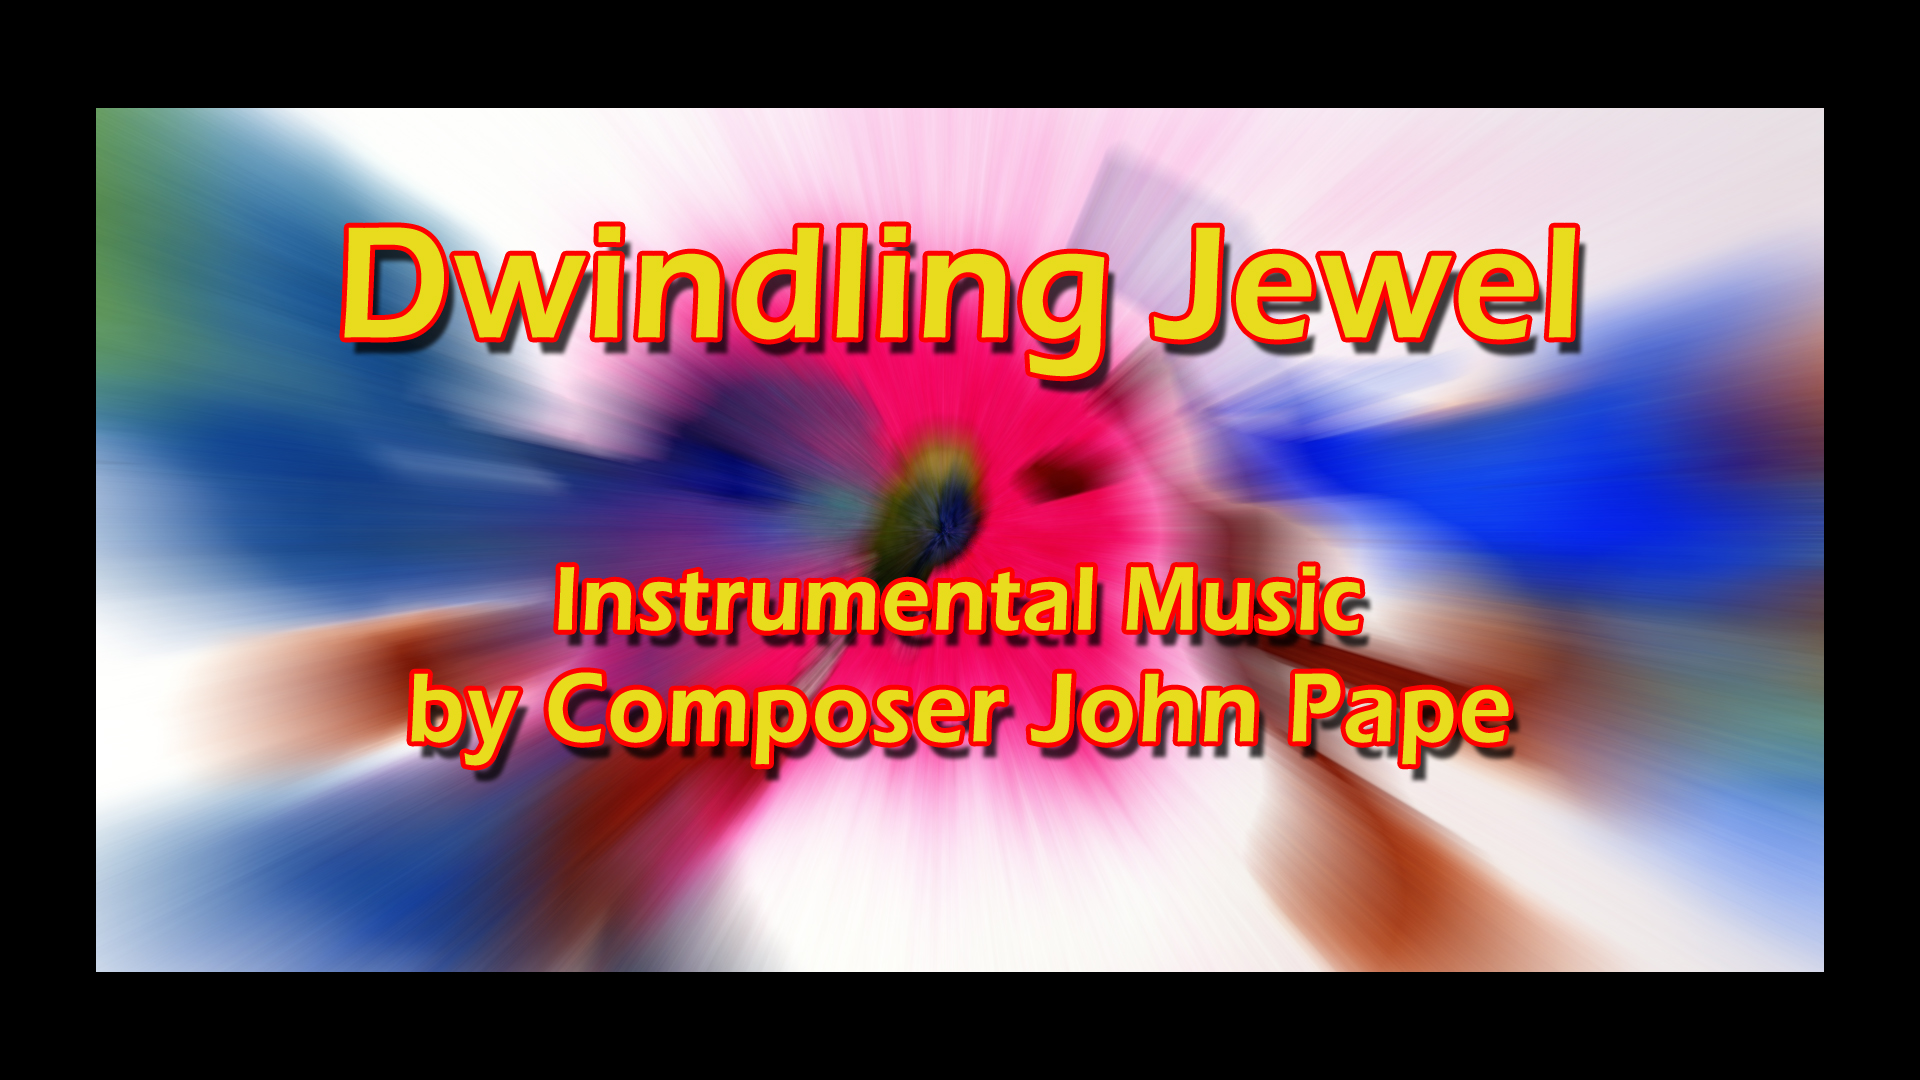 “Dwindling Jewel” by John Pape: A Captivating Electric Guitar Journey